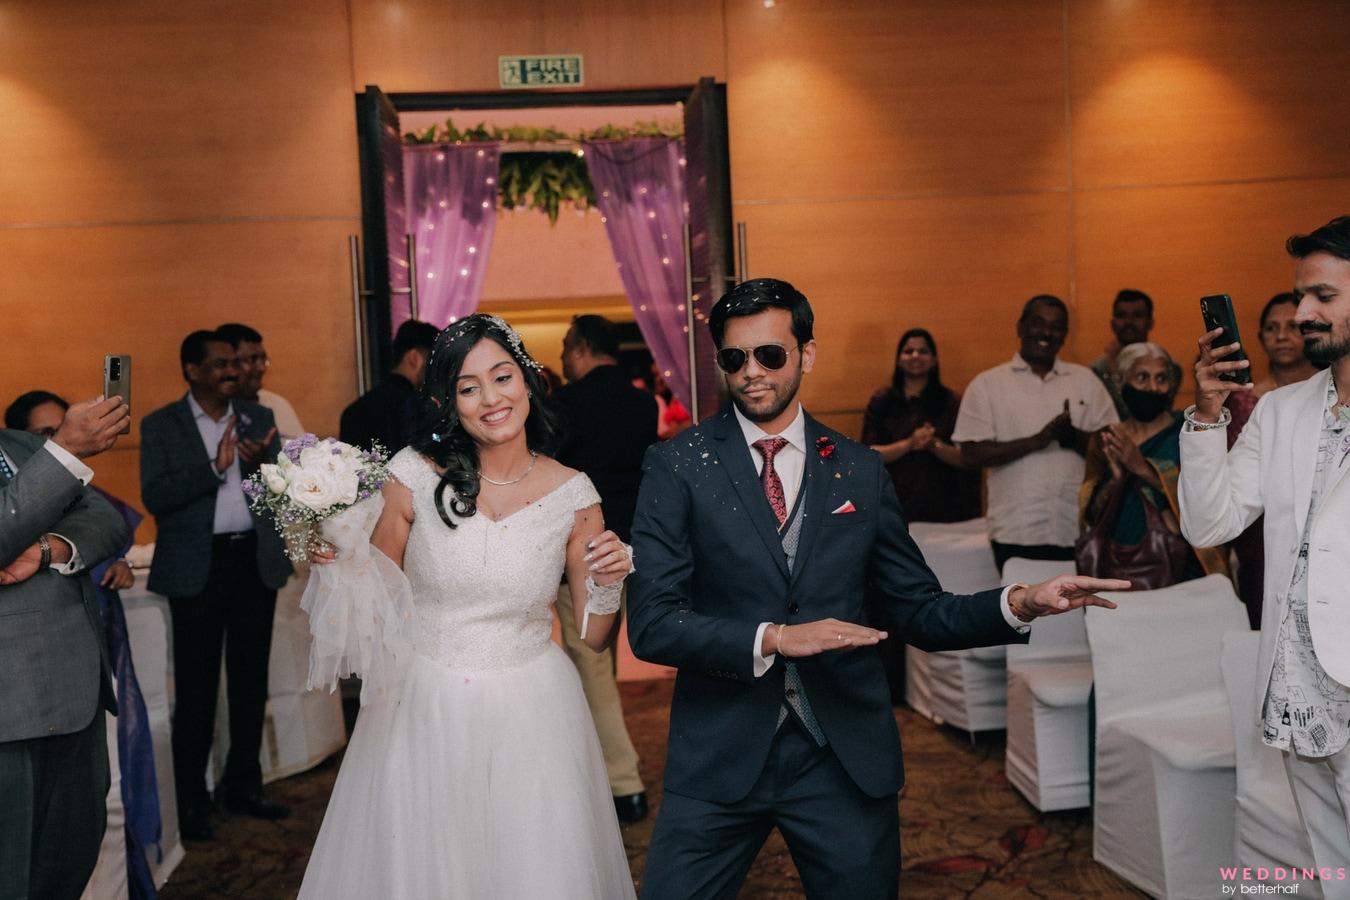 Gravity stills photography - In frame: @supraja_sundar123 @dr_vinoth_physio  #wedding#reception #photography#indianwedding#love#couplegoals#couple#weddingphotography#bride#groom# poses#candid#sonyalpha#chennaiphotographer#fashion#creative#trending ...